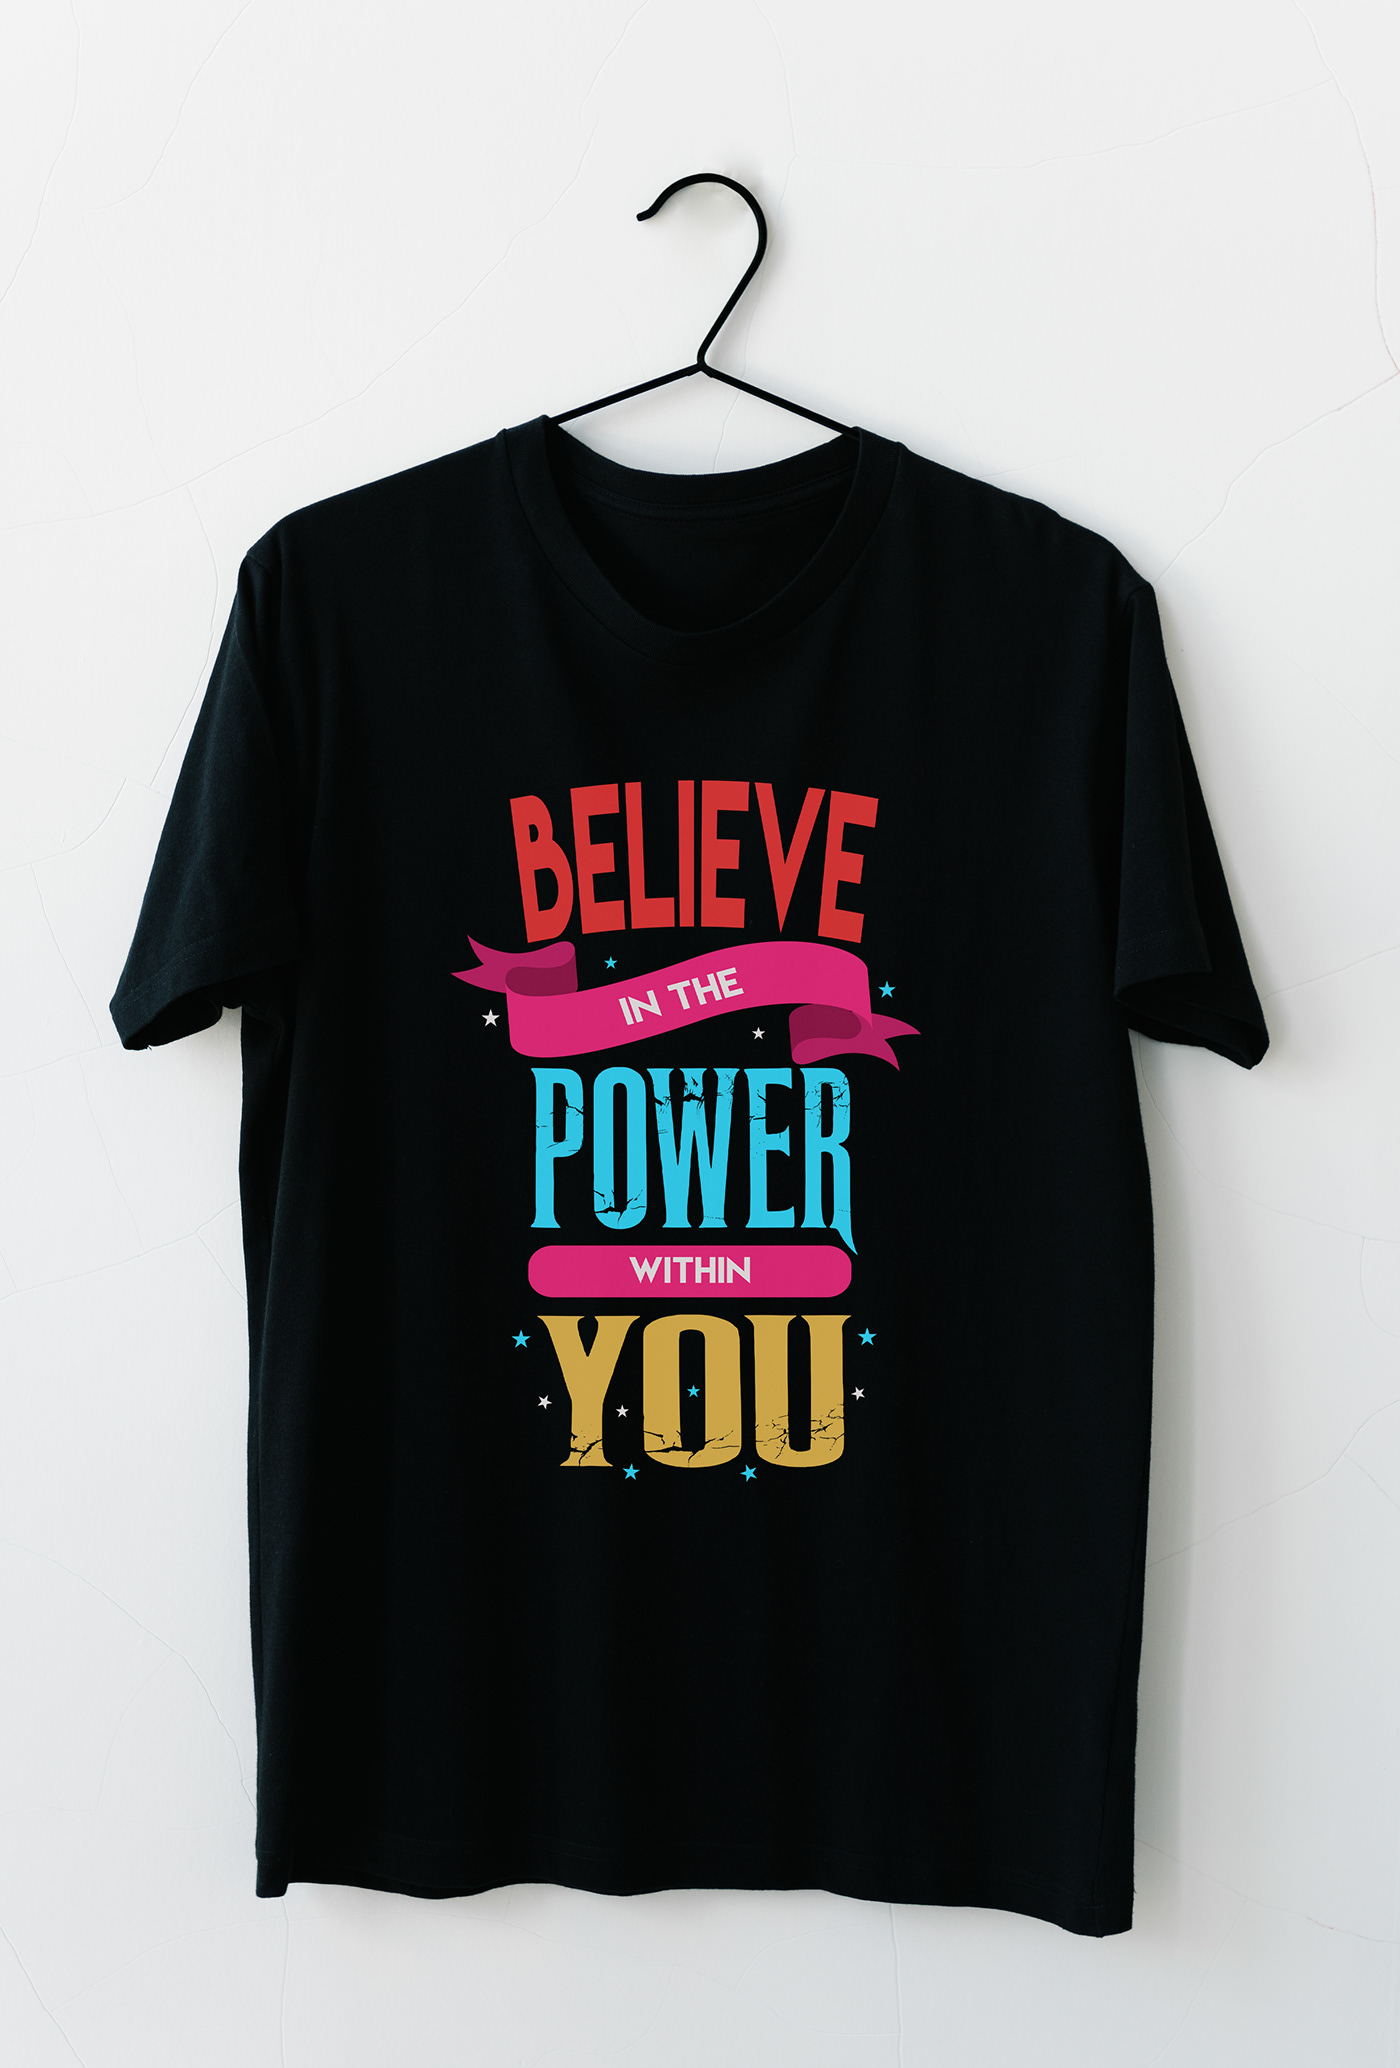 t-shirt Tshirt Design Fashion  Photography  typography   typography design typographic Motivational Quotes motivational t-shirt trendy